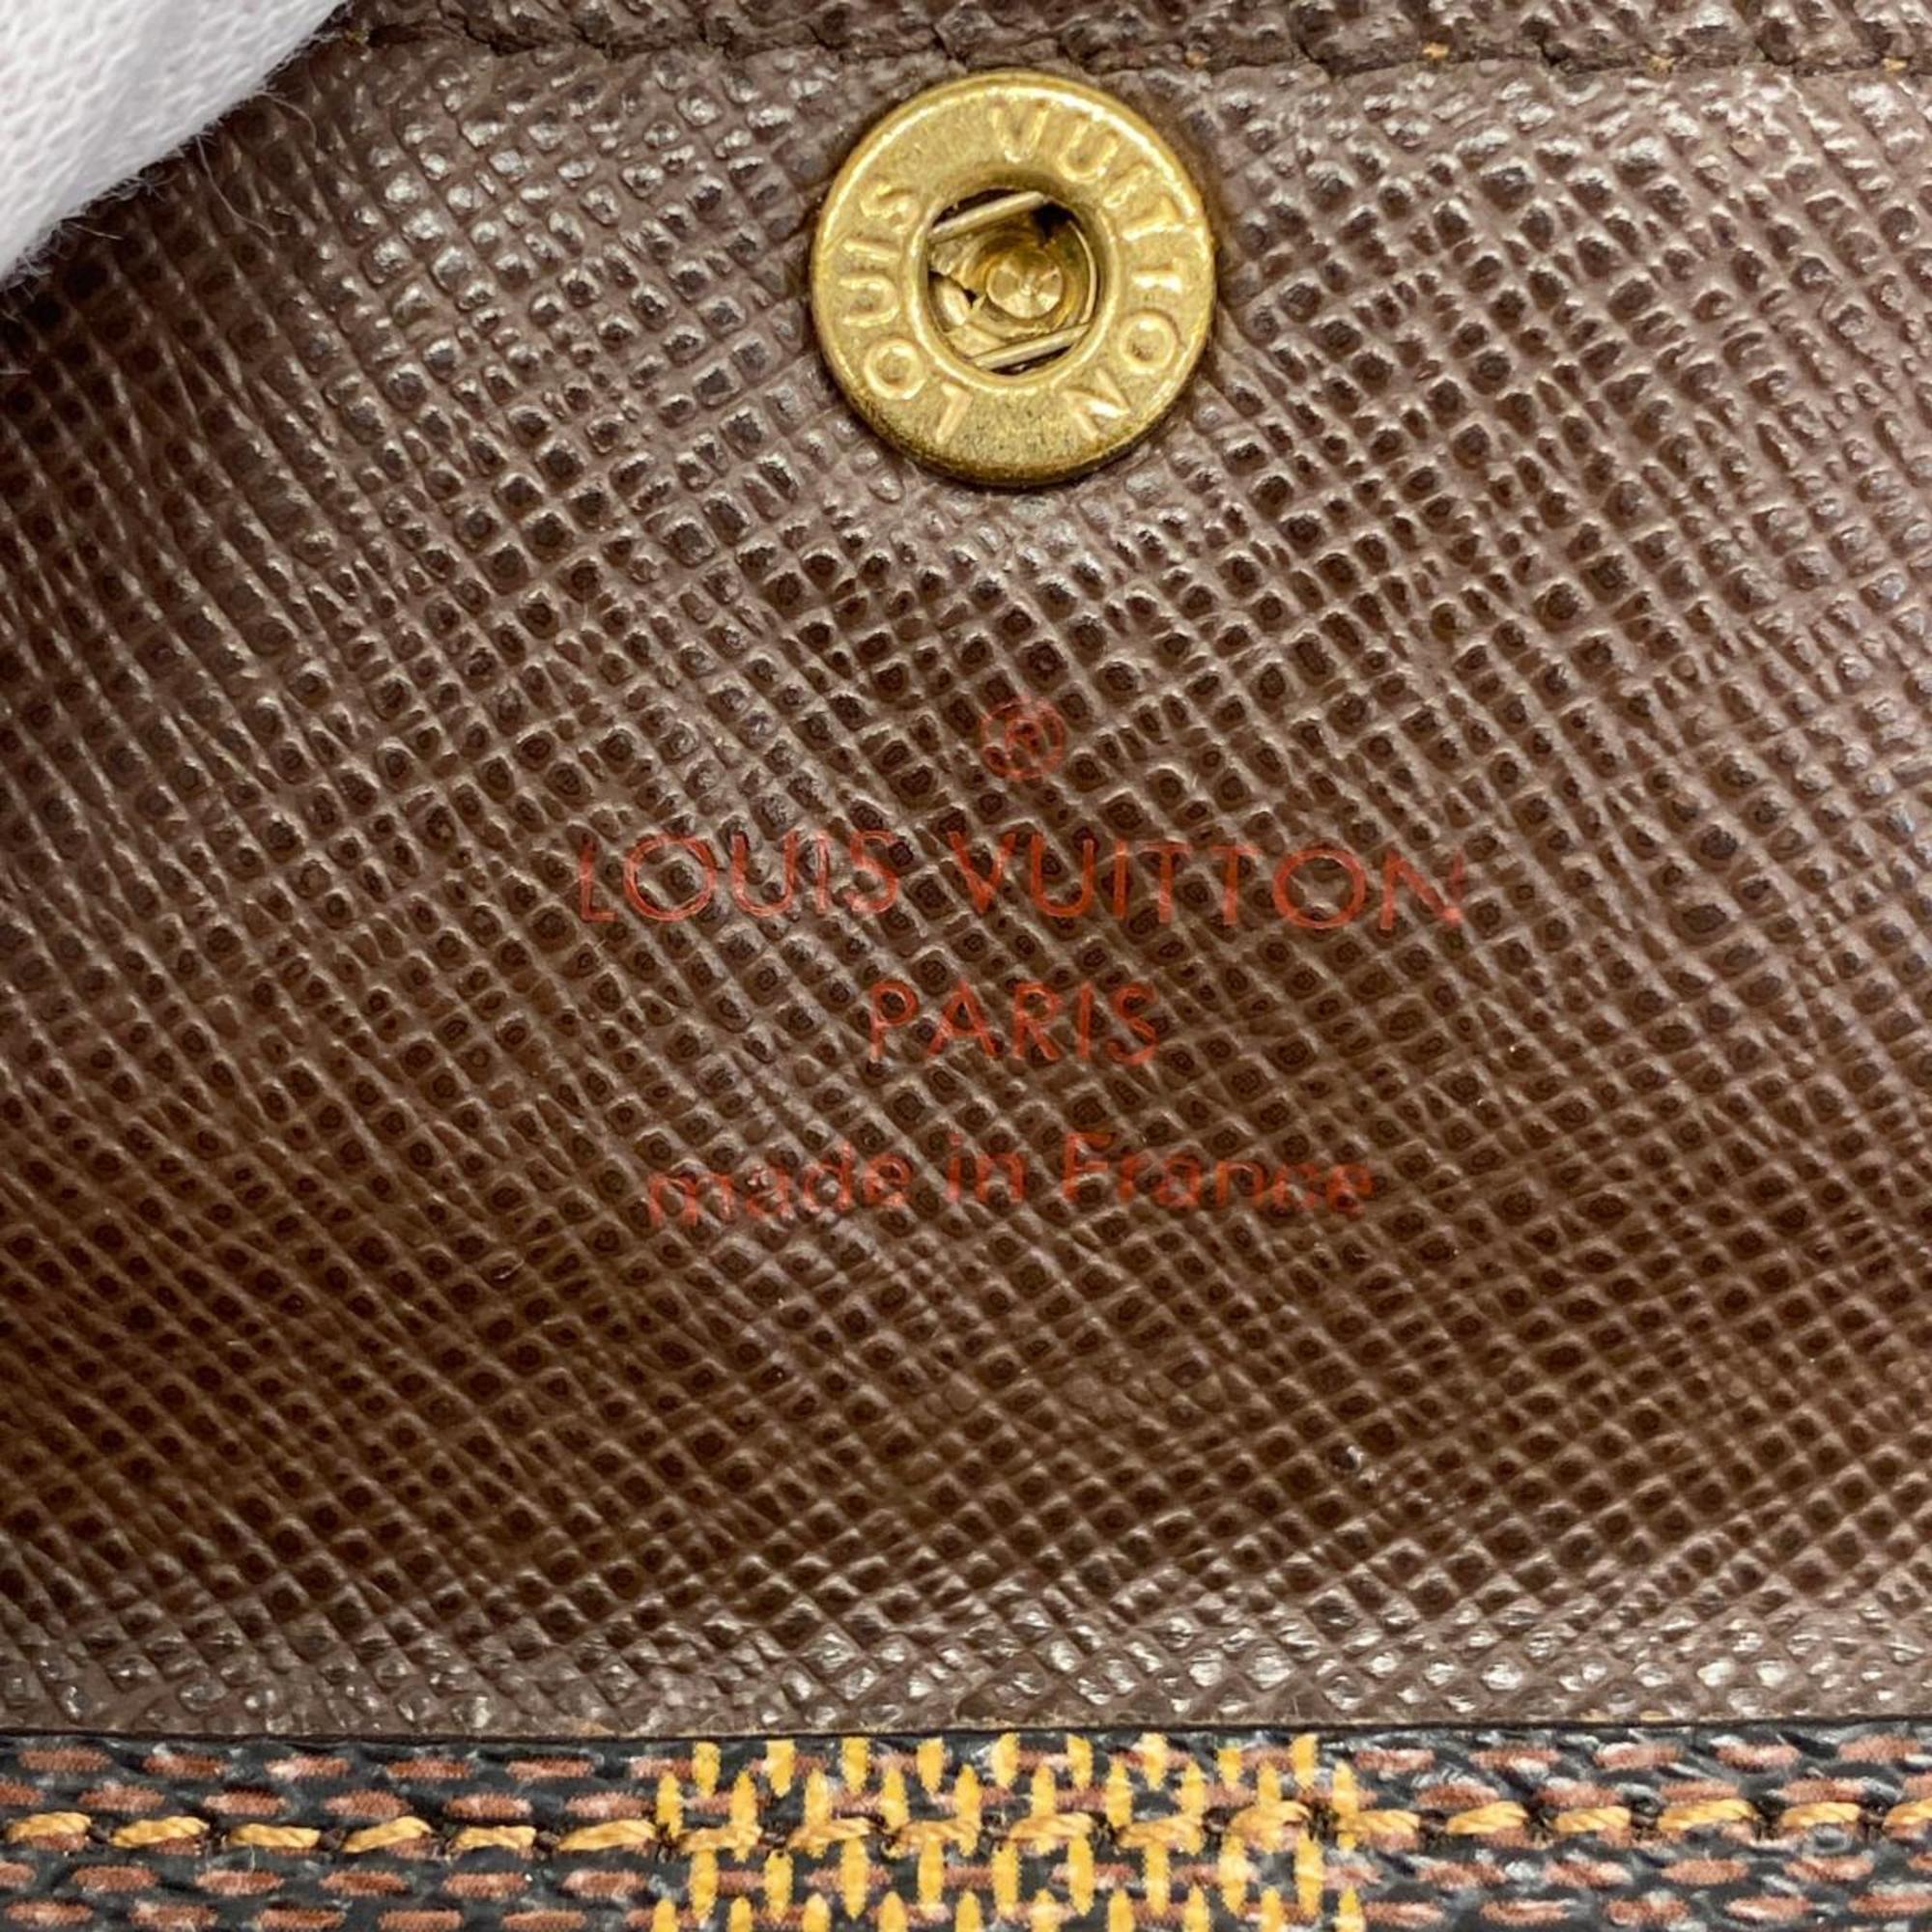 Louis Vuitton Wallet/Coin Case Damier Ludlow N62925 Ebene Men's/Women's